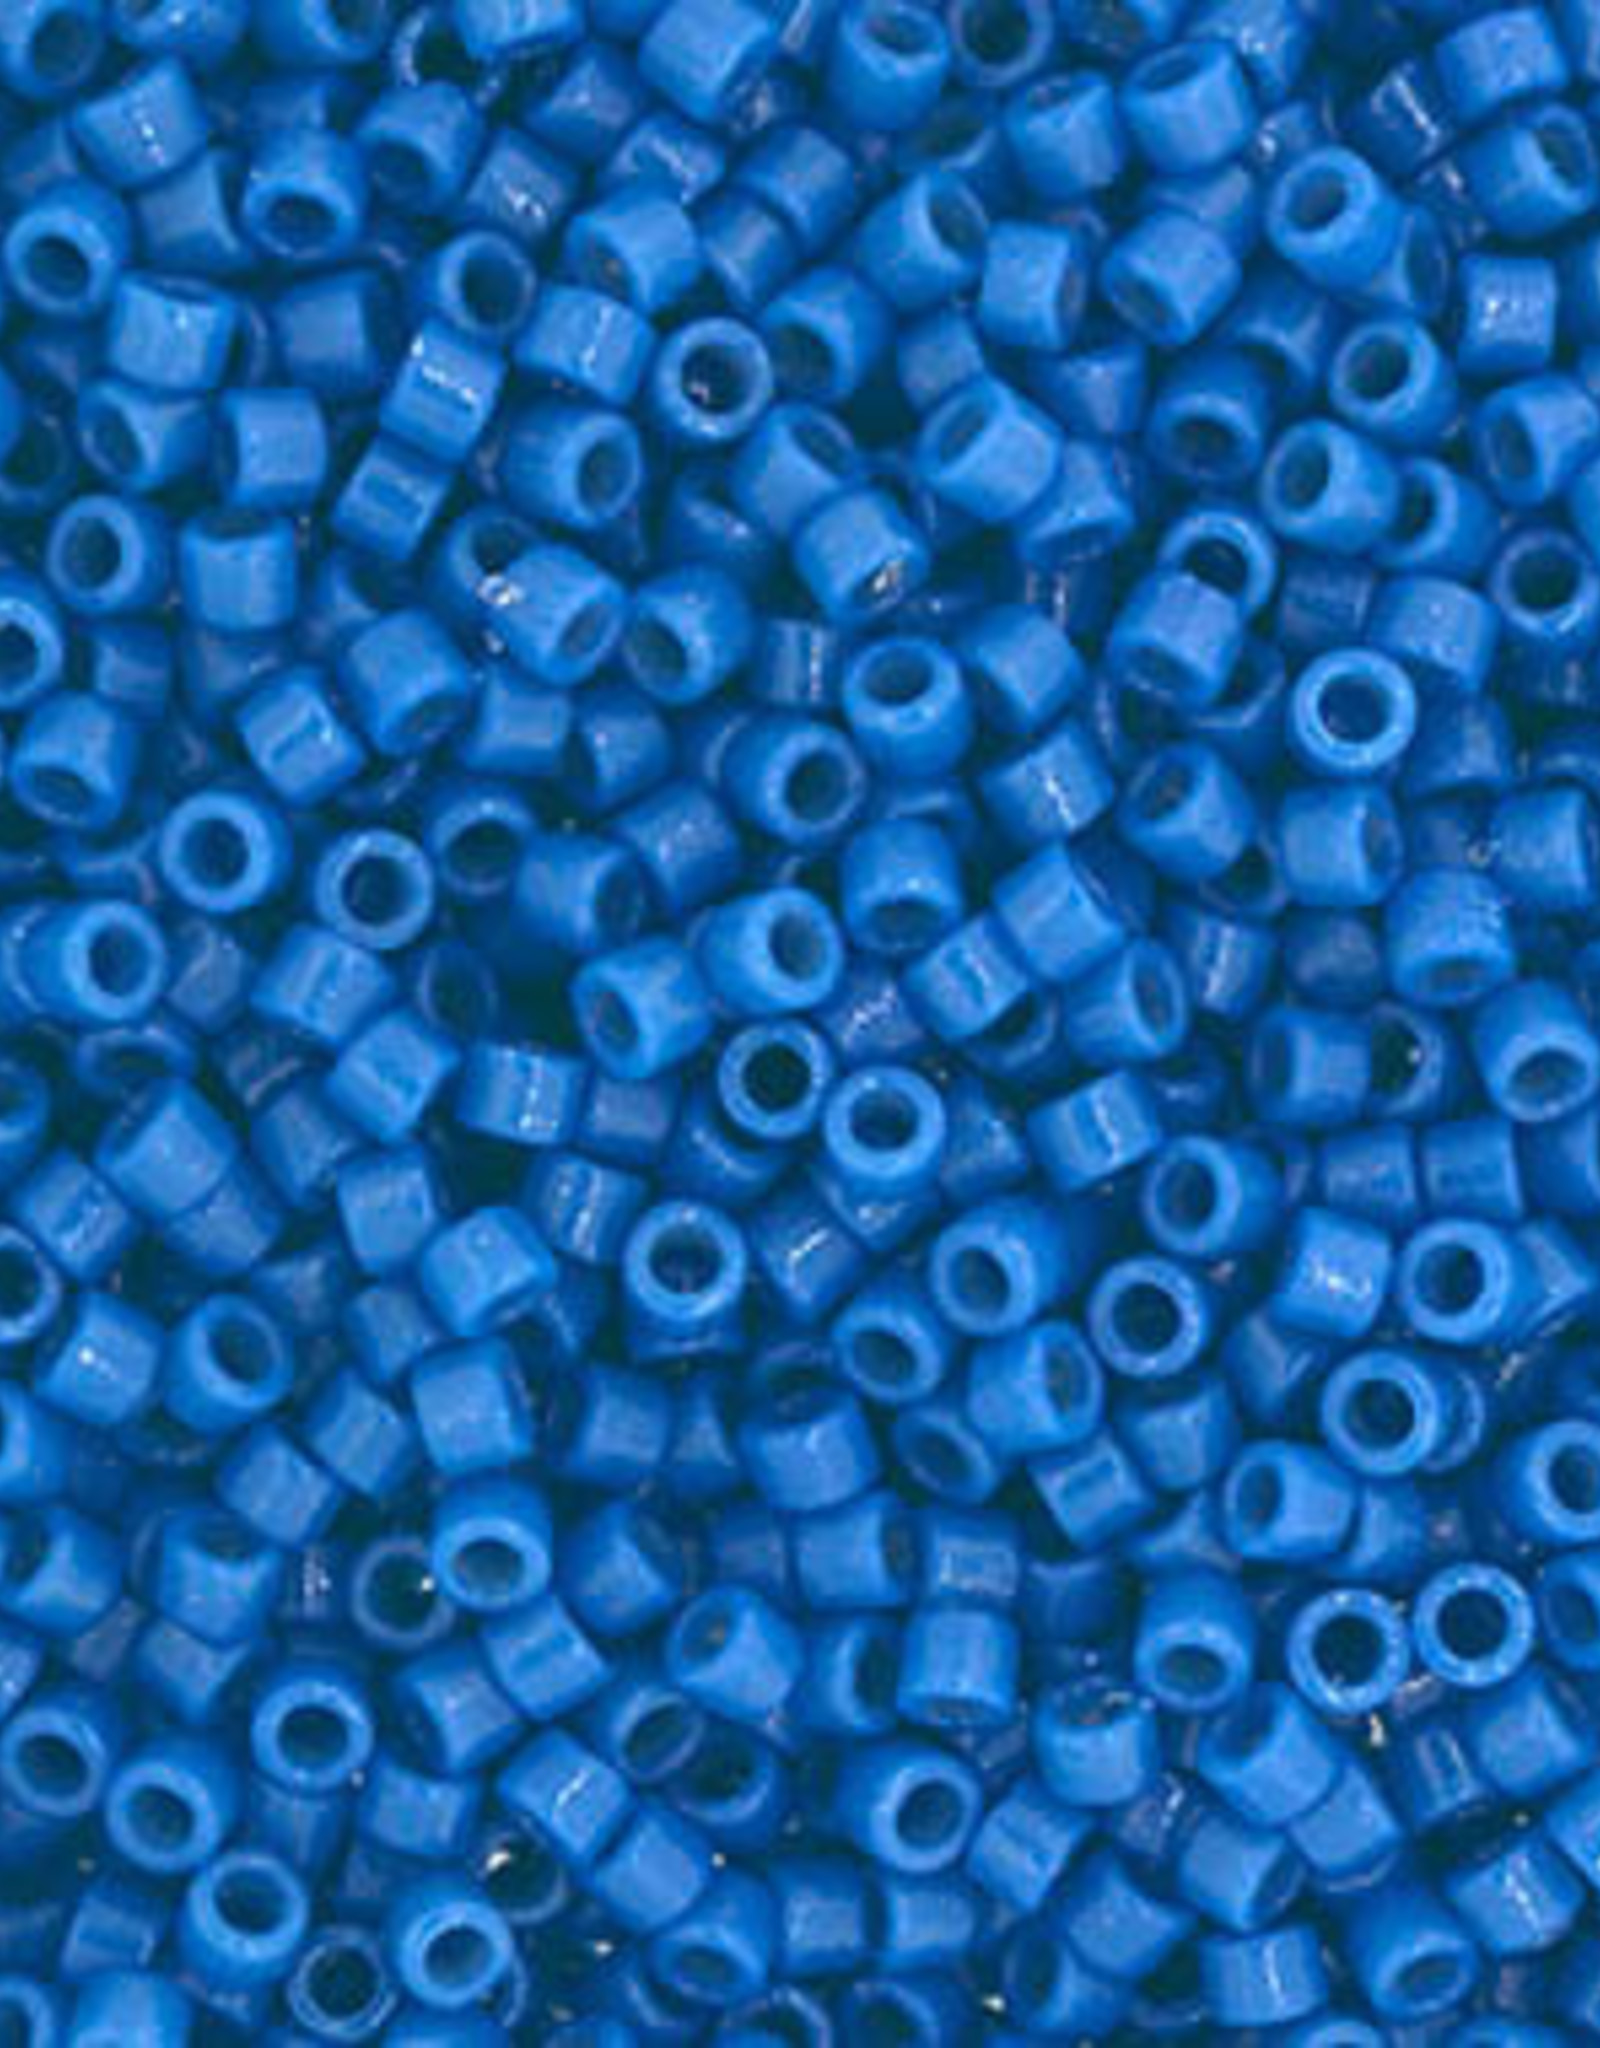 Miyuki Delica Seed Beads Delica 11/0  Program Duracoat Opaque Dyed Dusk Blue 2135V